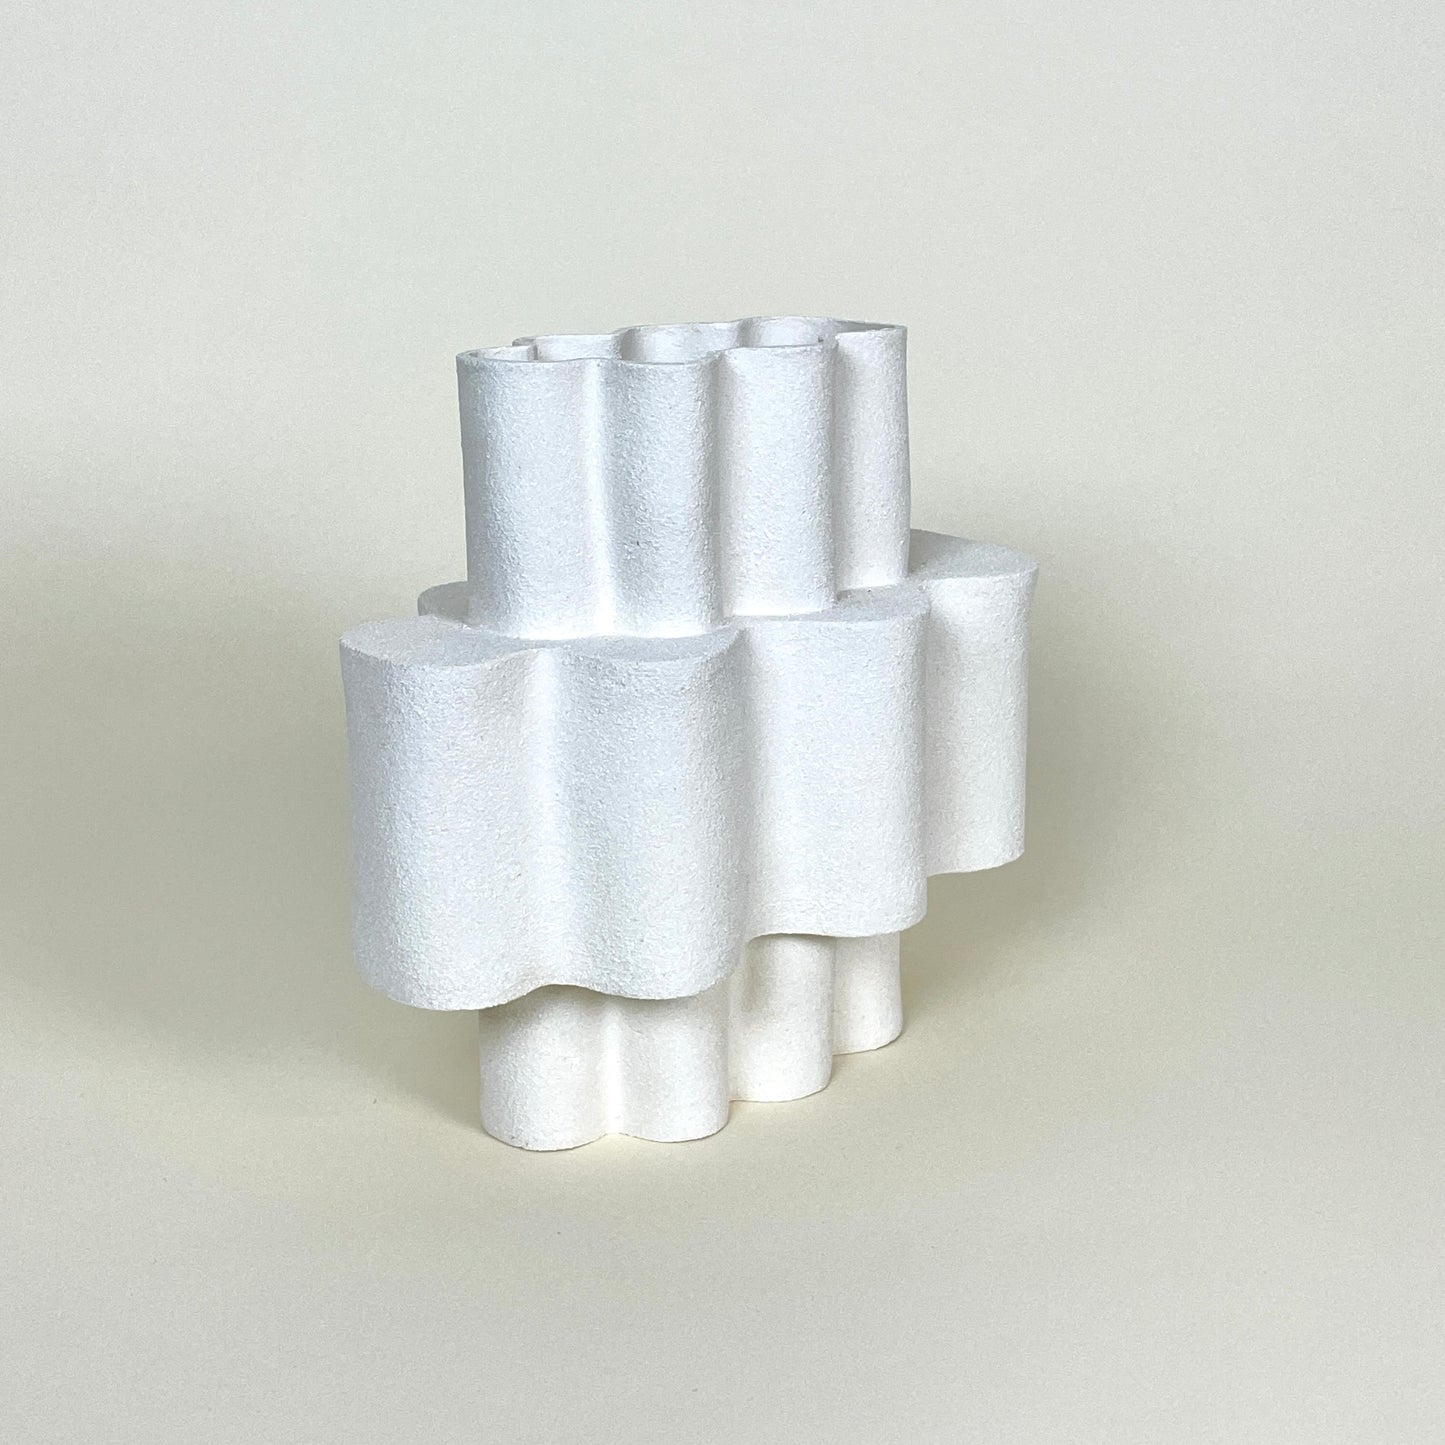 Floating vase by Kerstin Olsson